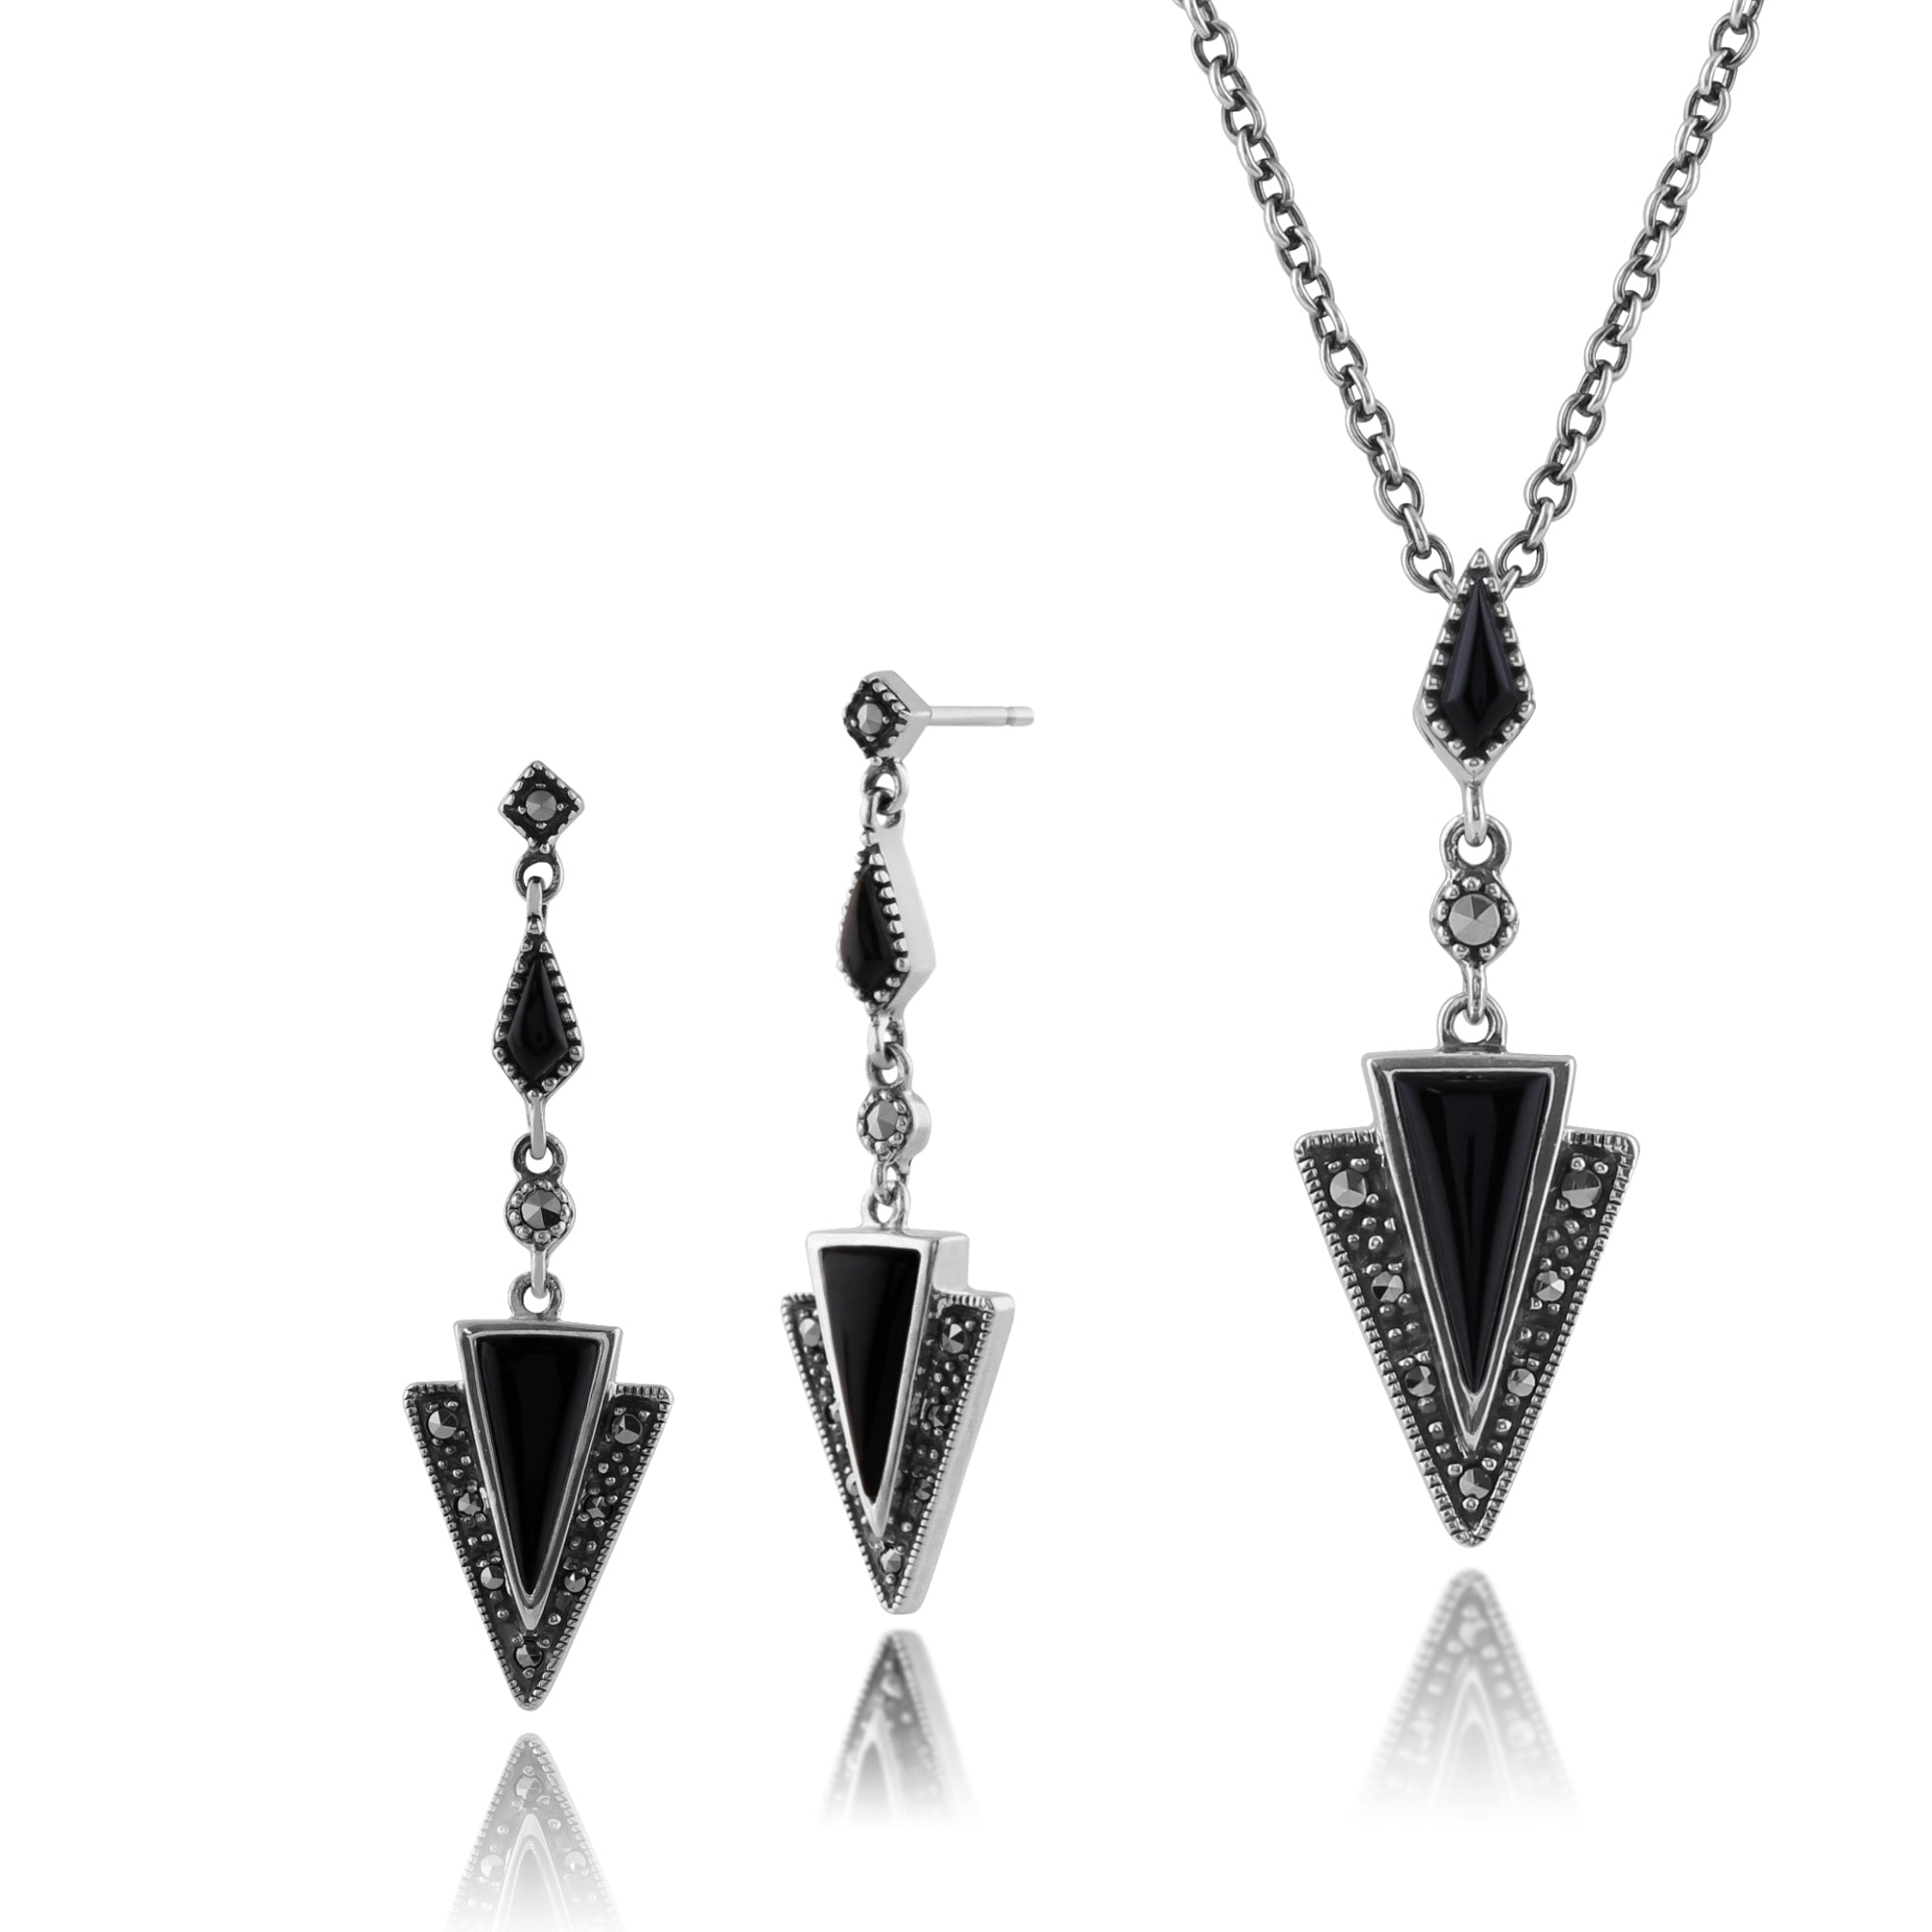 214E823004925-214N658304925 Art Deco Style Style Black Onyx & Marcasite Triangle Drop Earrings & Pendant Set in 925 Sterling Silver 1